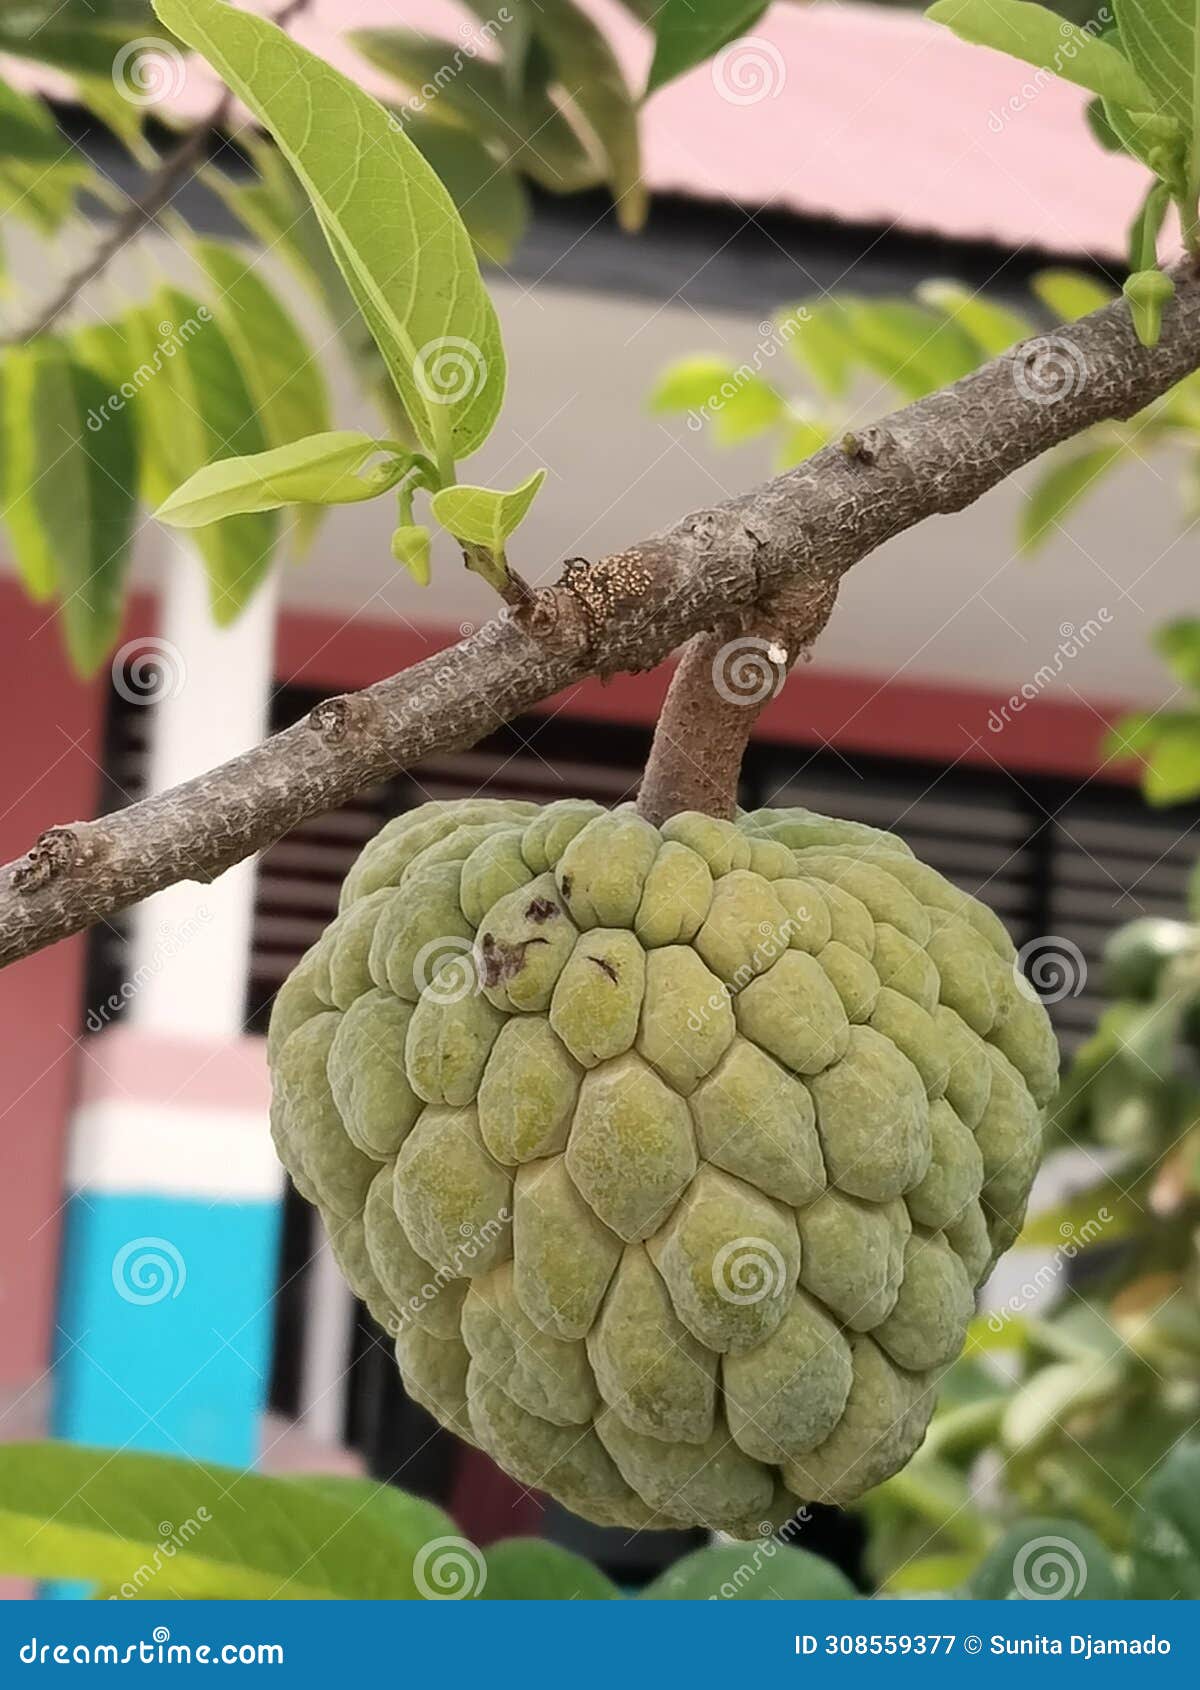 srikaya fruit